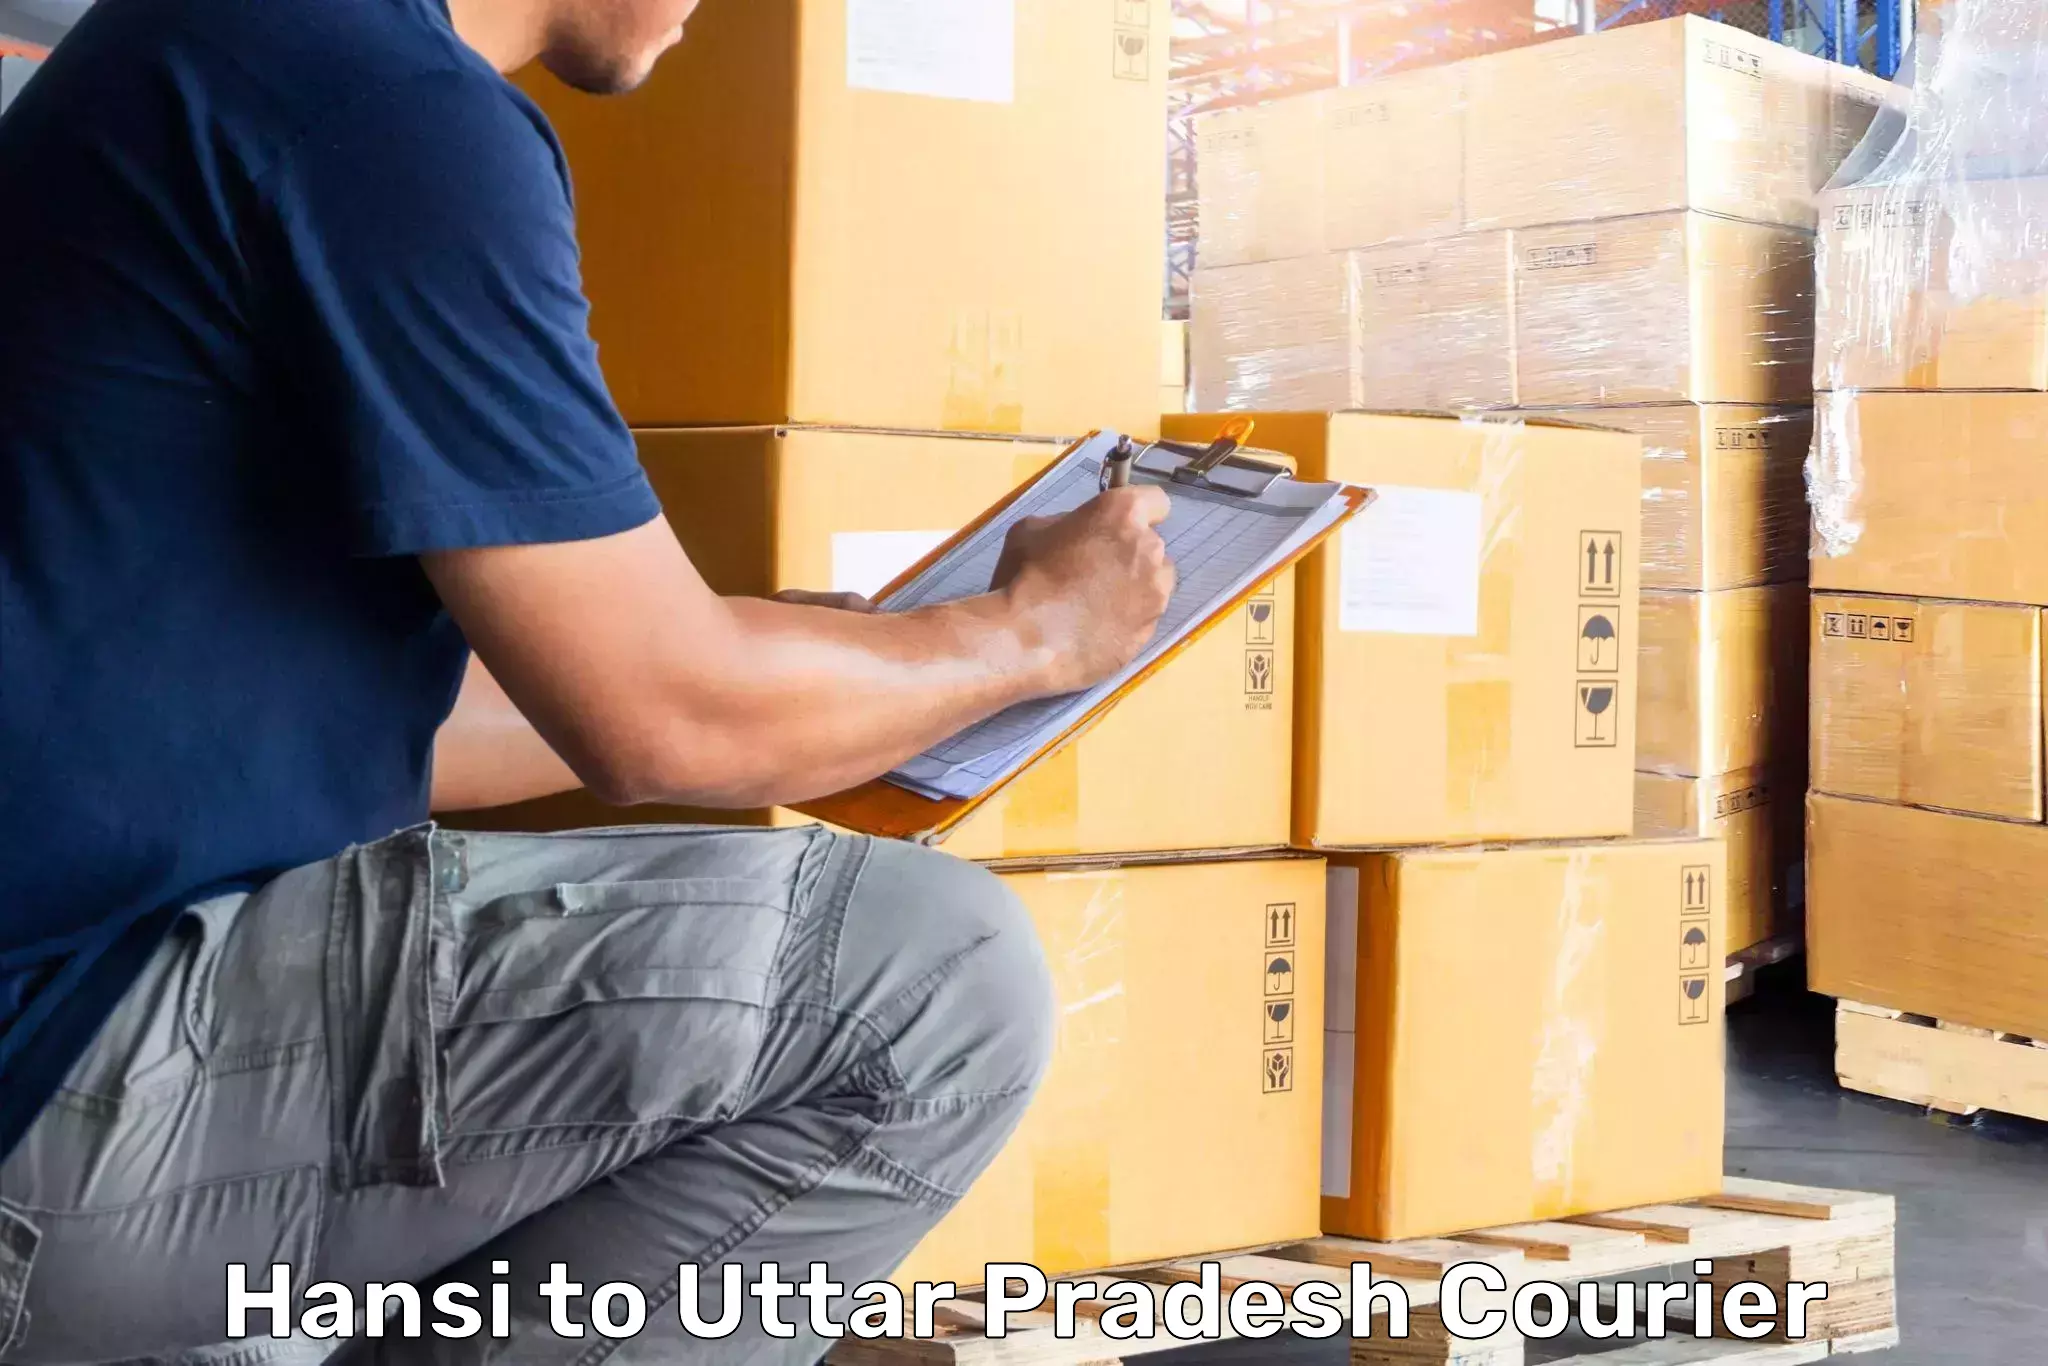 Luggage delivery network Hansi to Uttar Pradesh